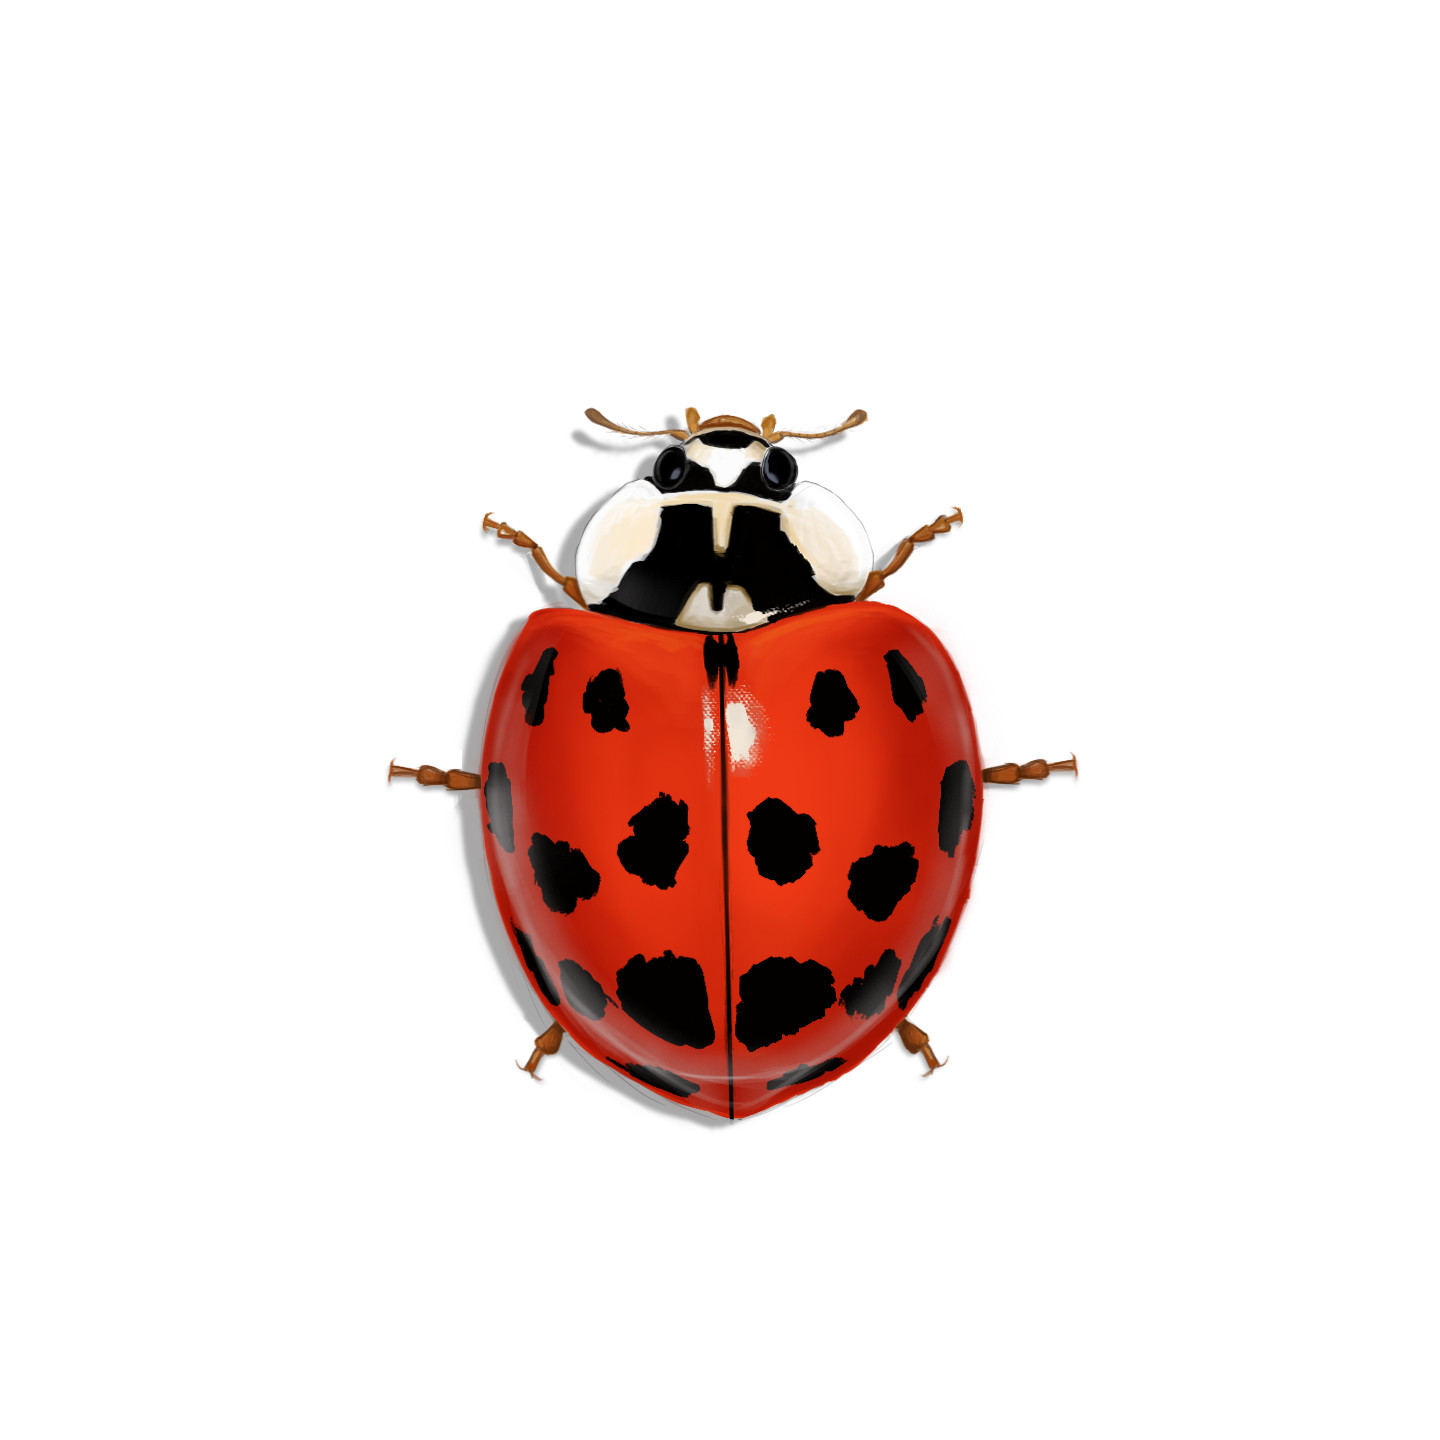 http://seebugs.com/wp-content/uploads/2016/09/Asian-Lady-Beetle.jpg